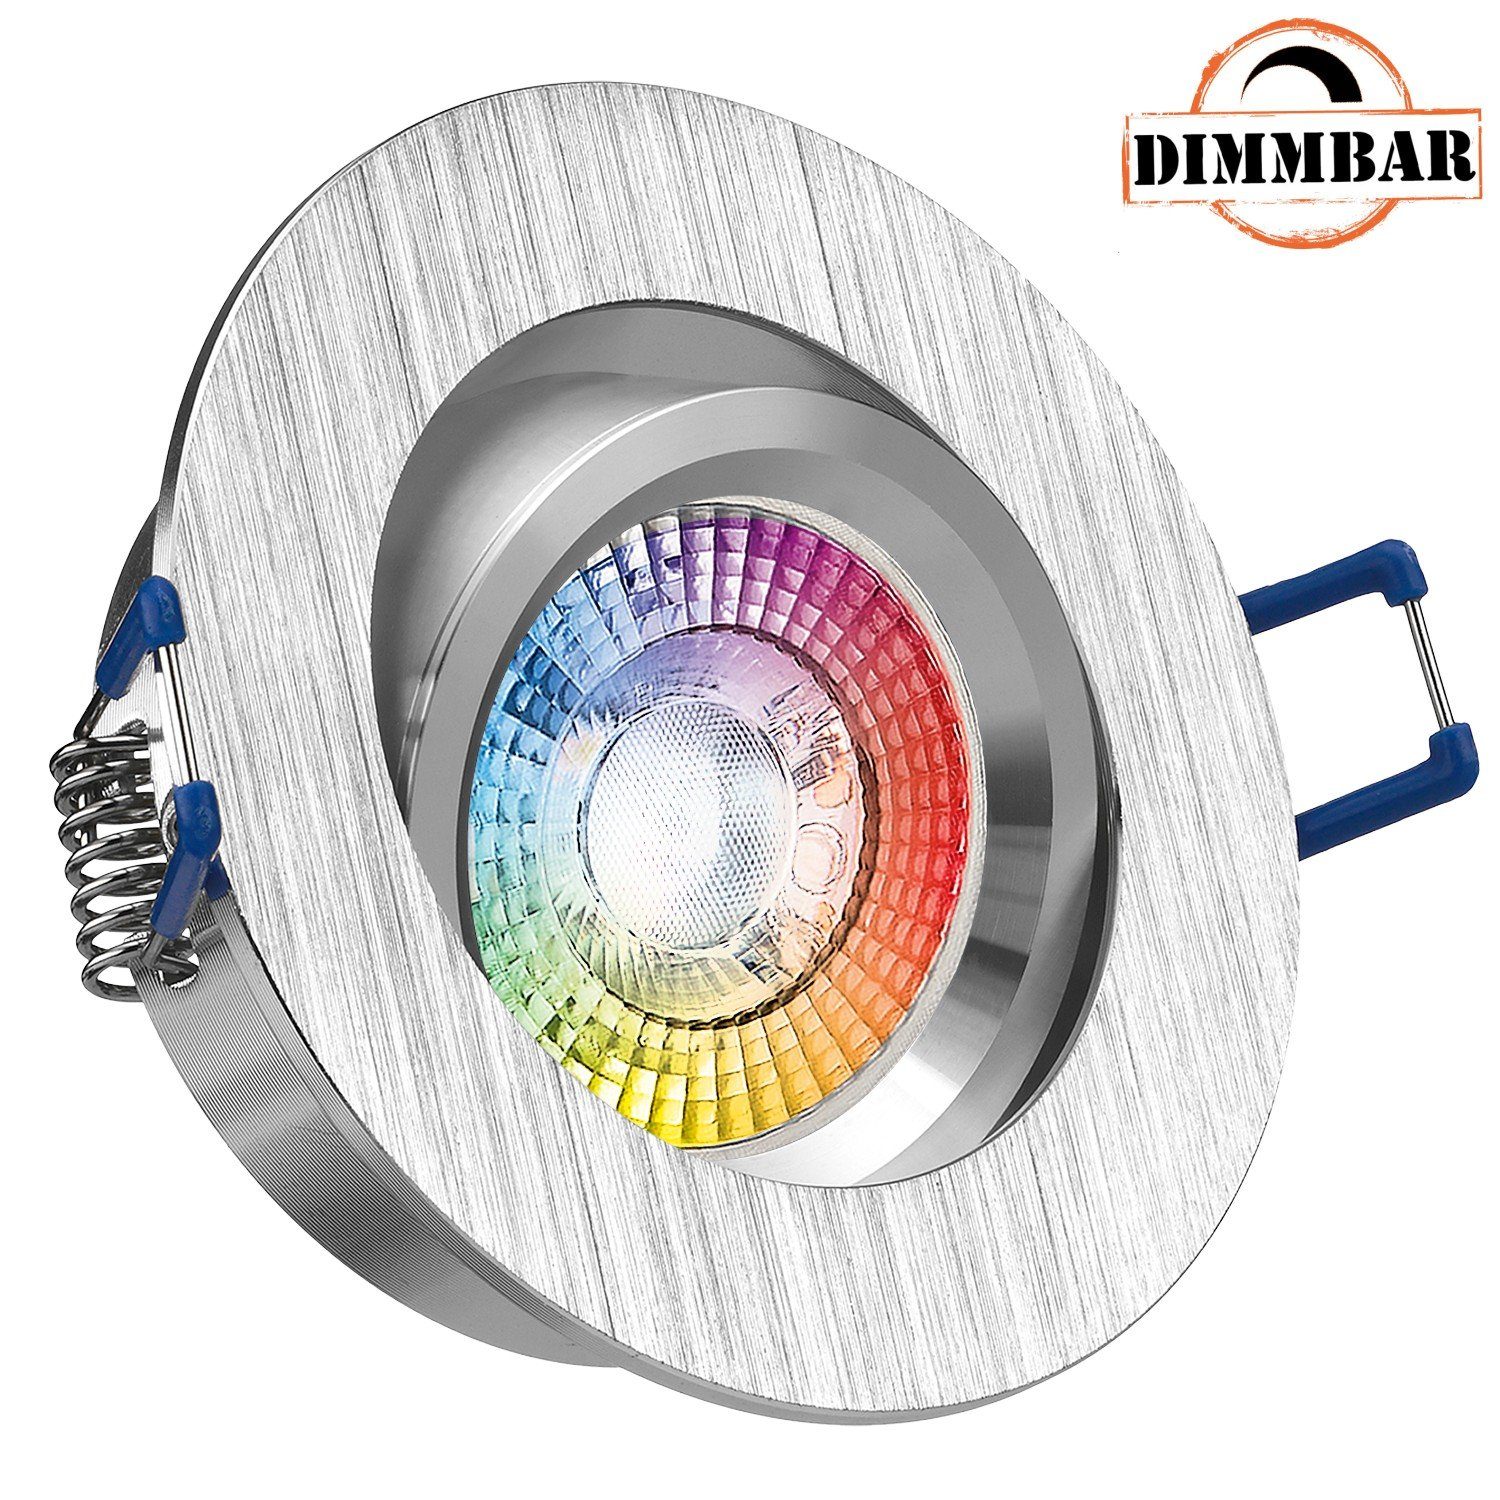 LED flach - LEDANDO in mit 3W extra Set RGB bicolor LED zweifarbig Einbaustrahler Einbaustrahler